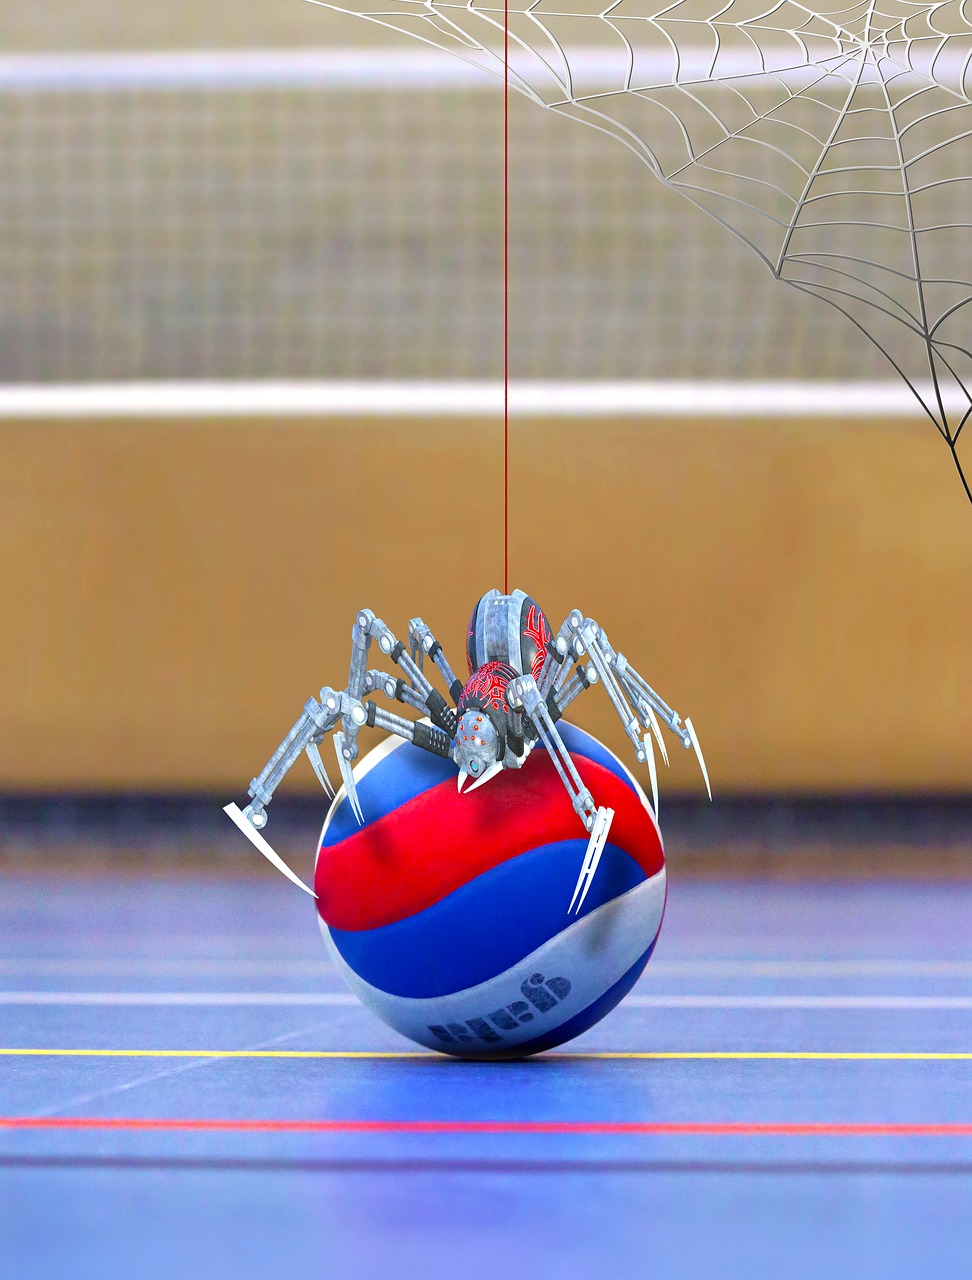 spider volleyball network free photo